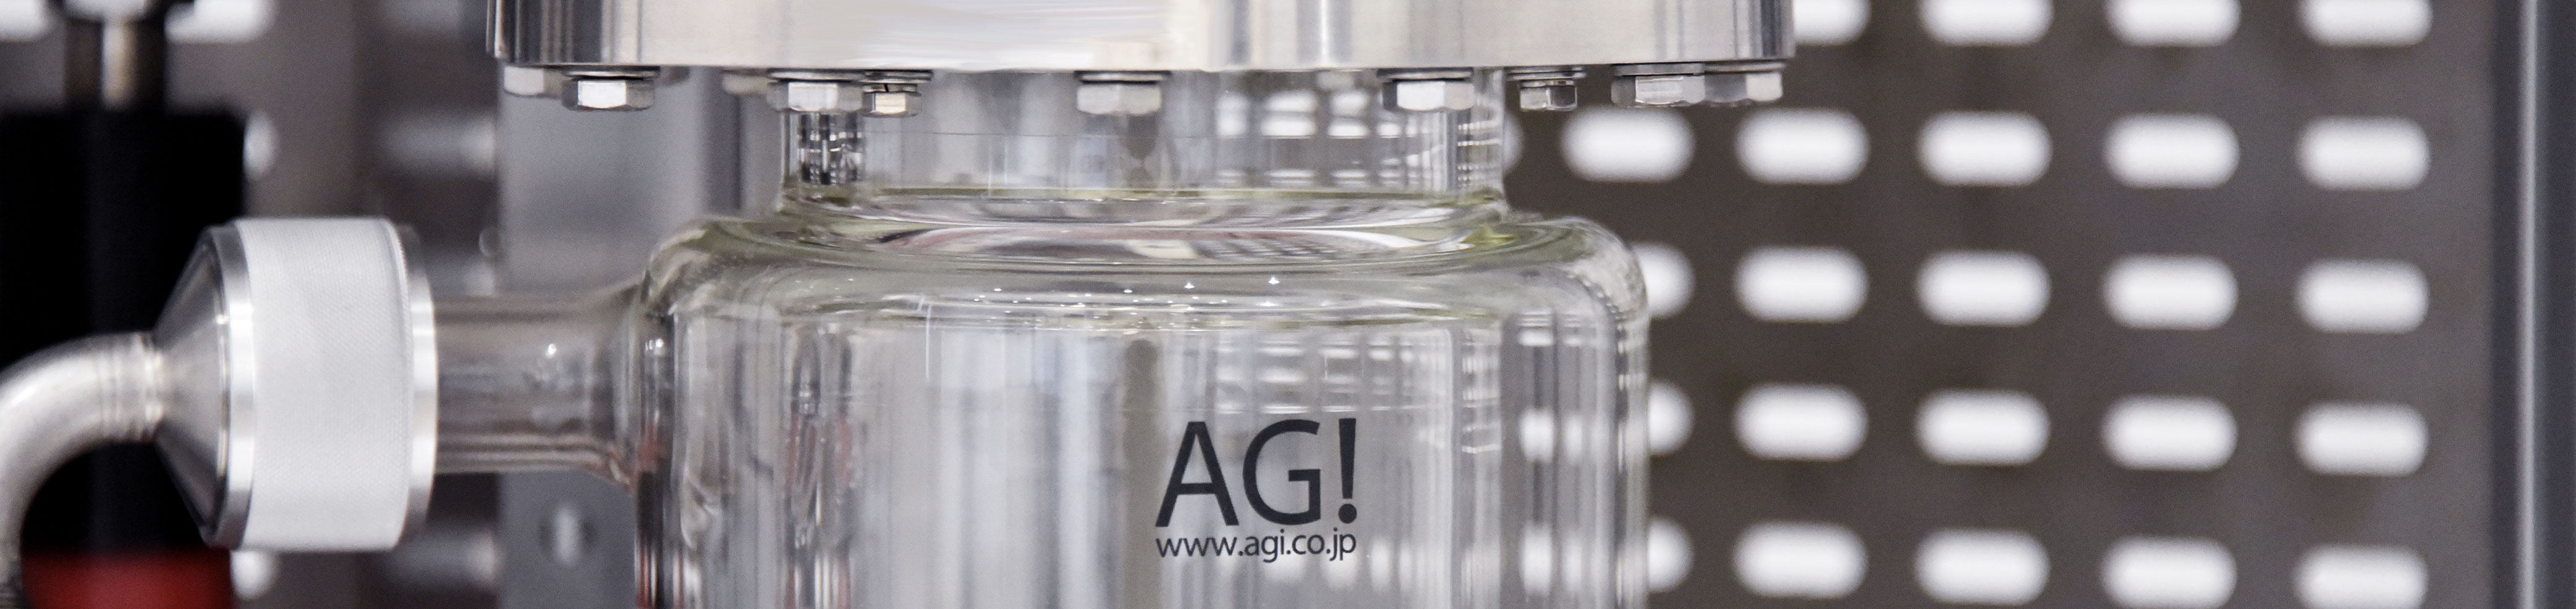 AGI Glassplant Pressure Reactor